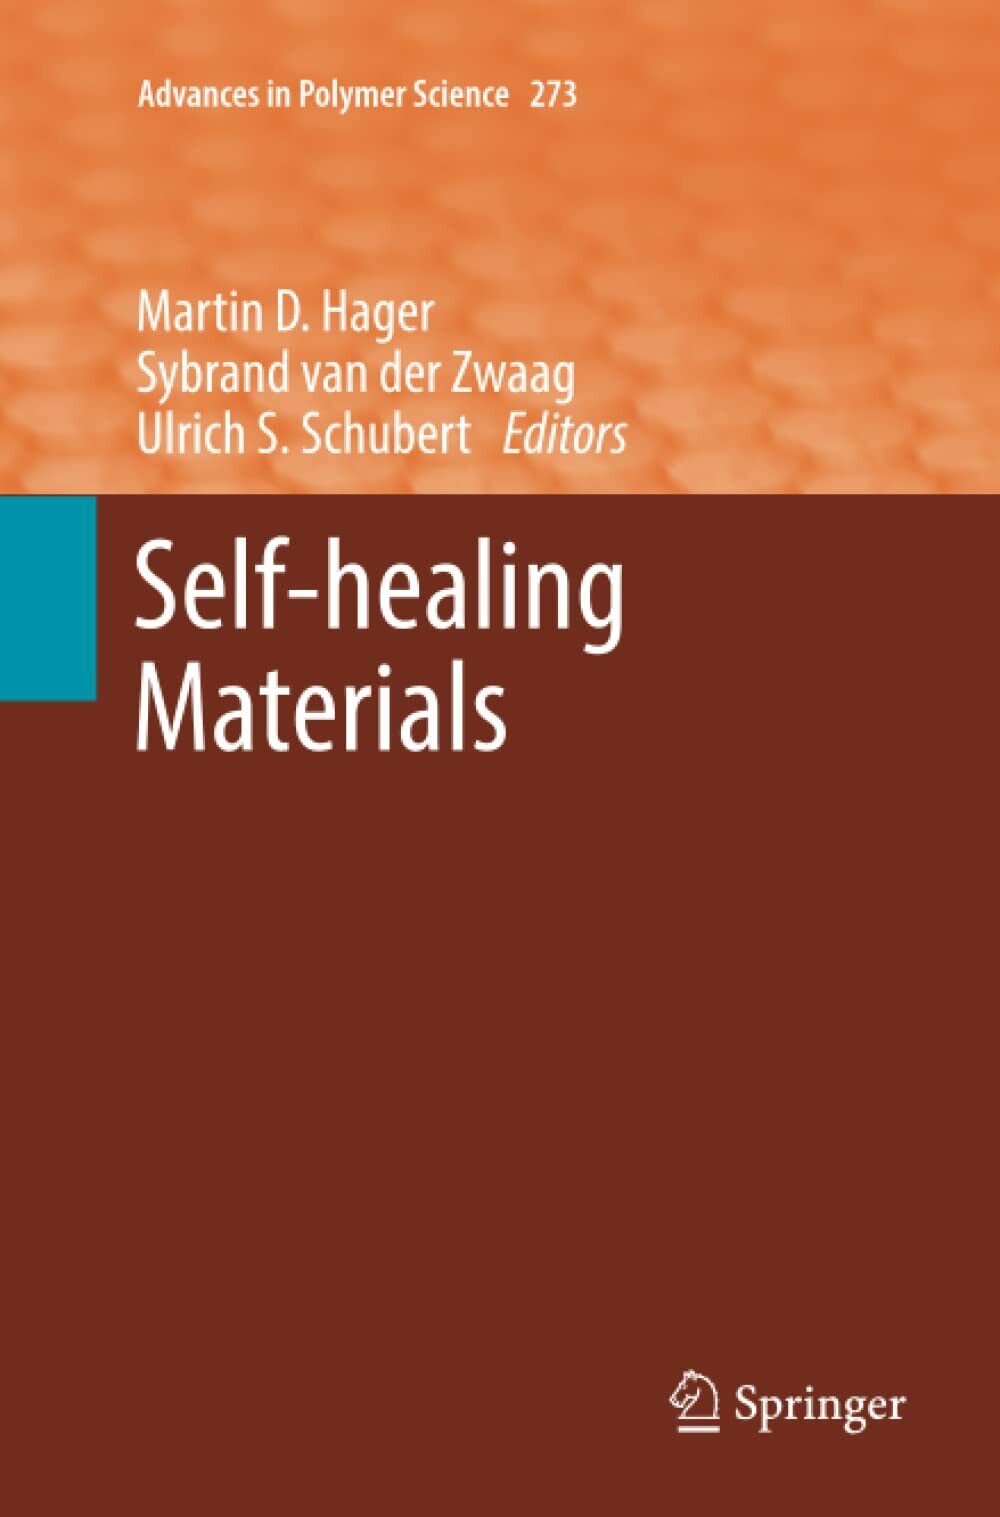 Self-healing Materials - Springer, 2018